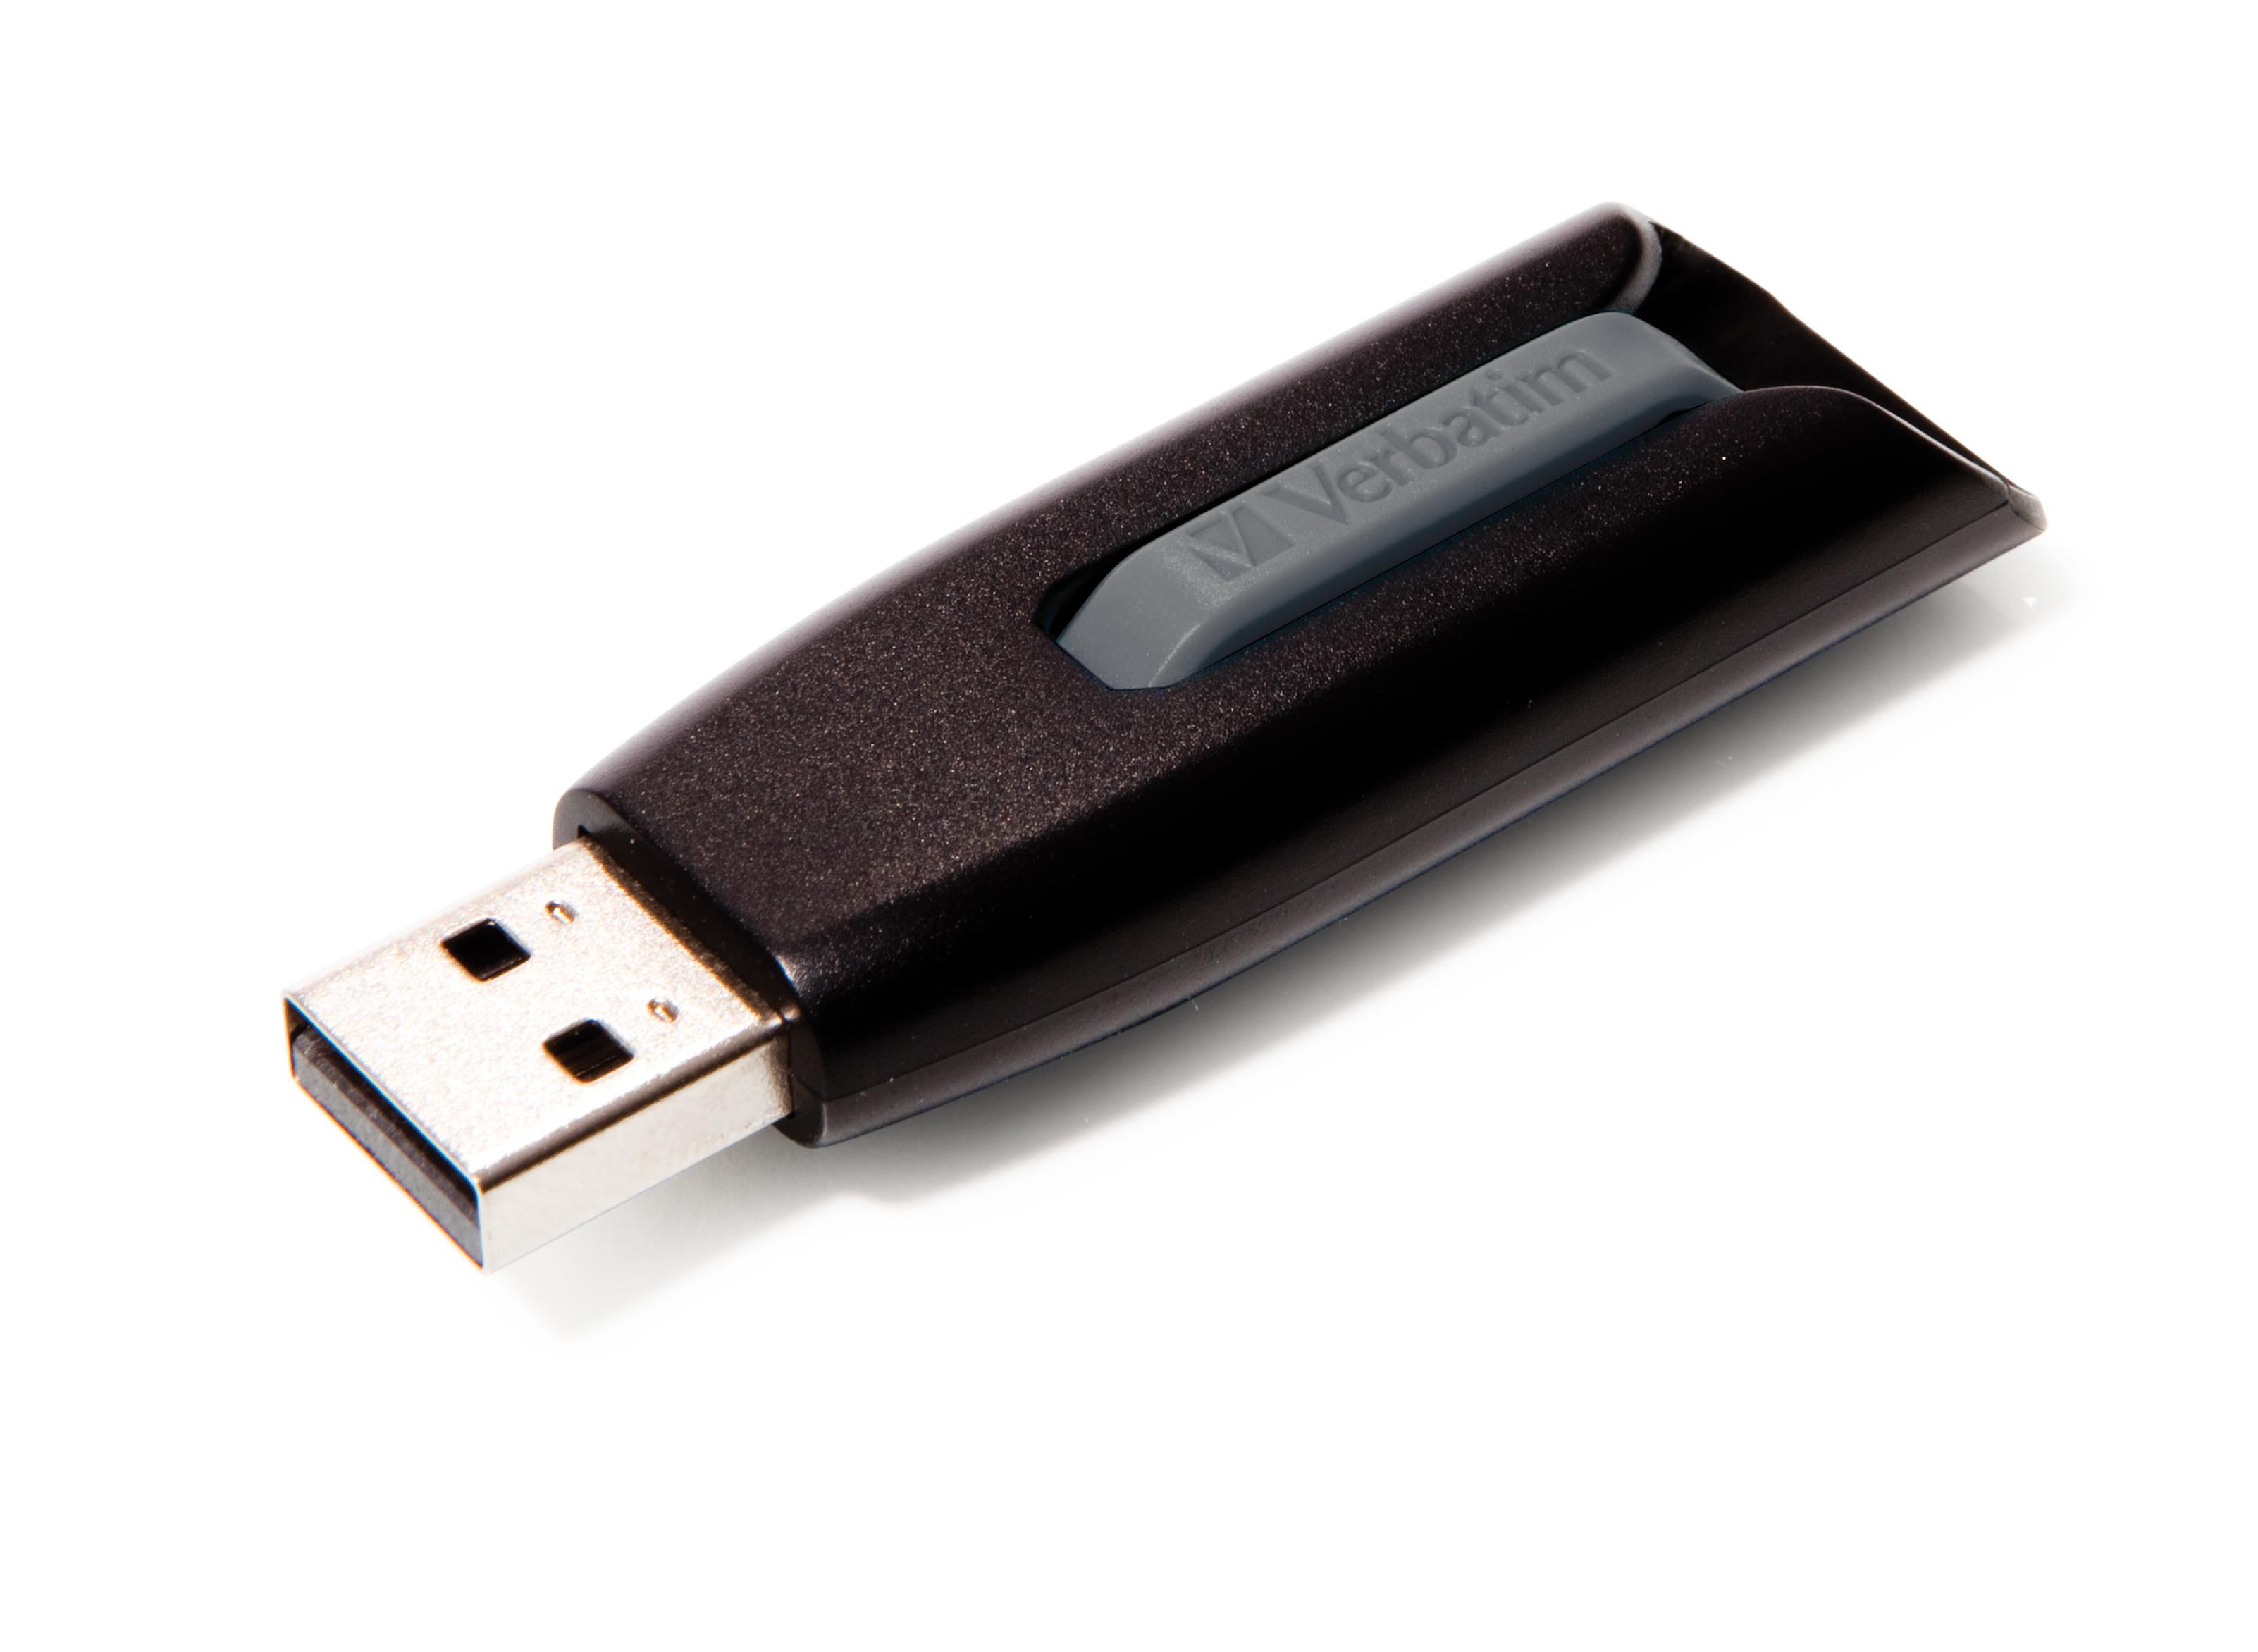 Verbatim  Verbatim V3 - USB 3.0-Stick 16 GB - Schwarz 